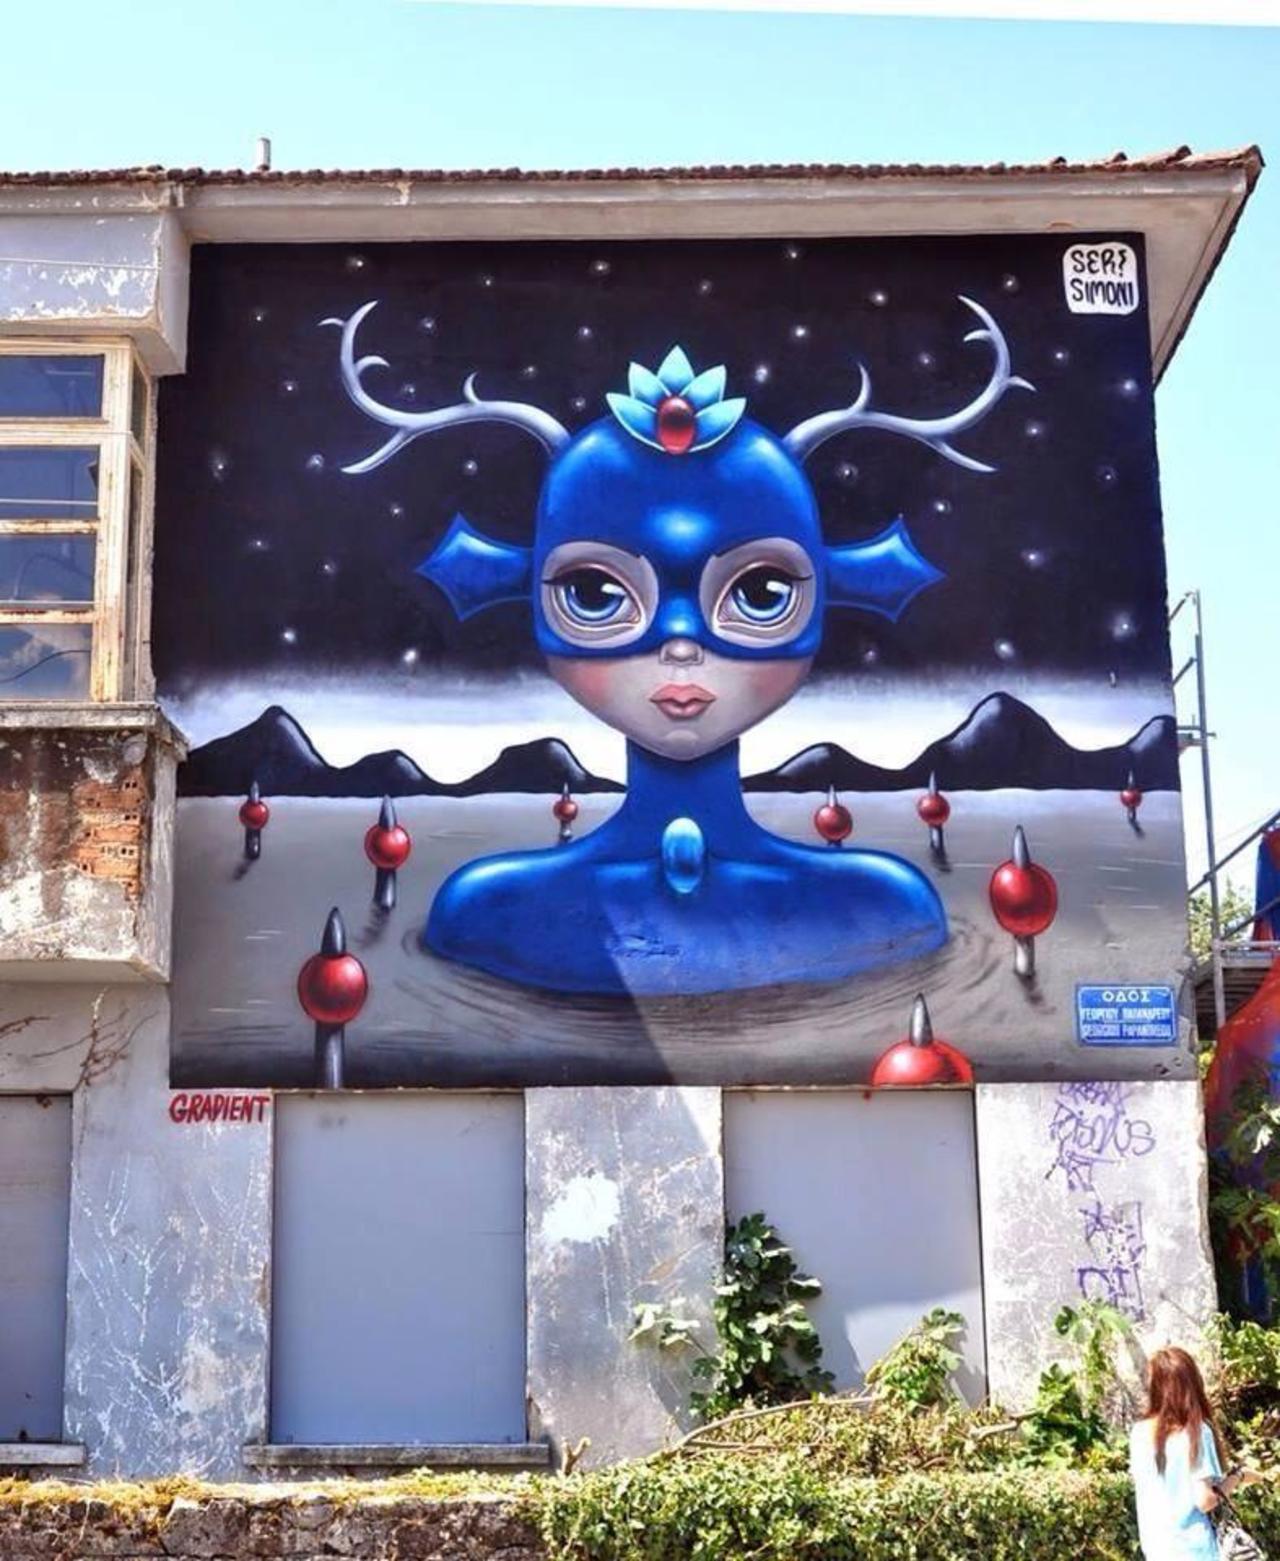 RT @designopinion: Simoni Fontana & Argiris Ser new unique Street Art mural in Loannina, Greece #art #mural #graffiti #streetart https://t.co/7o56KAHmiT